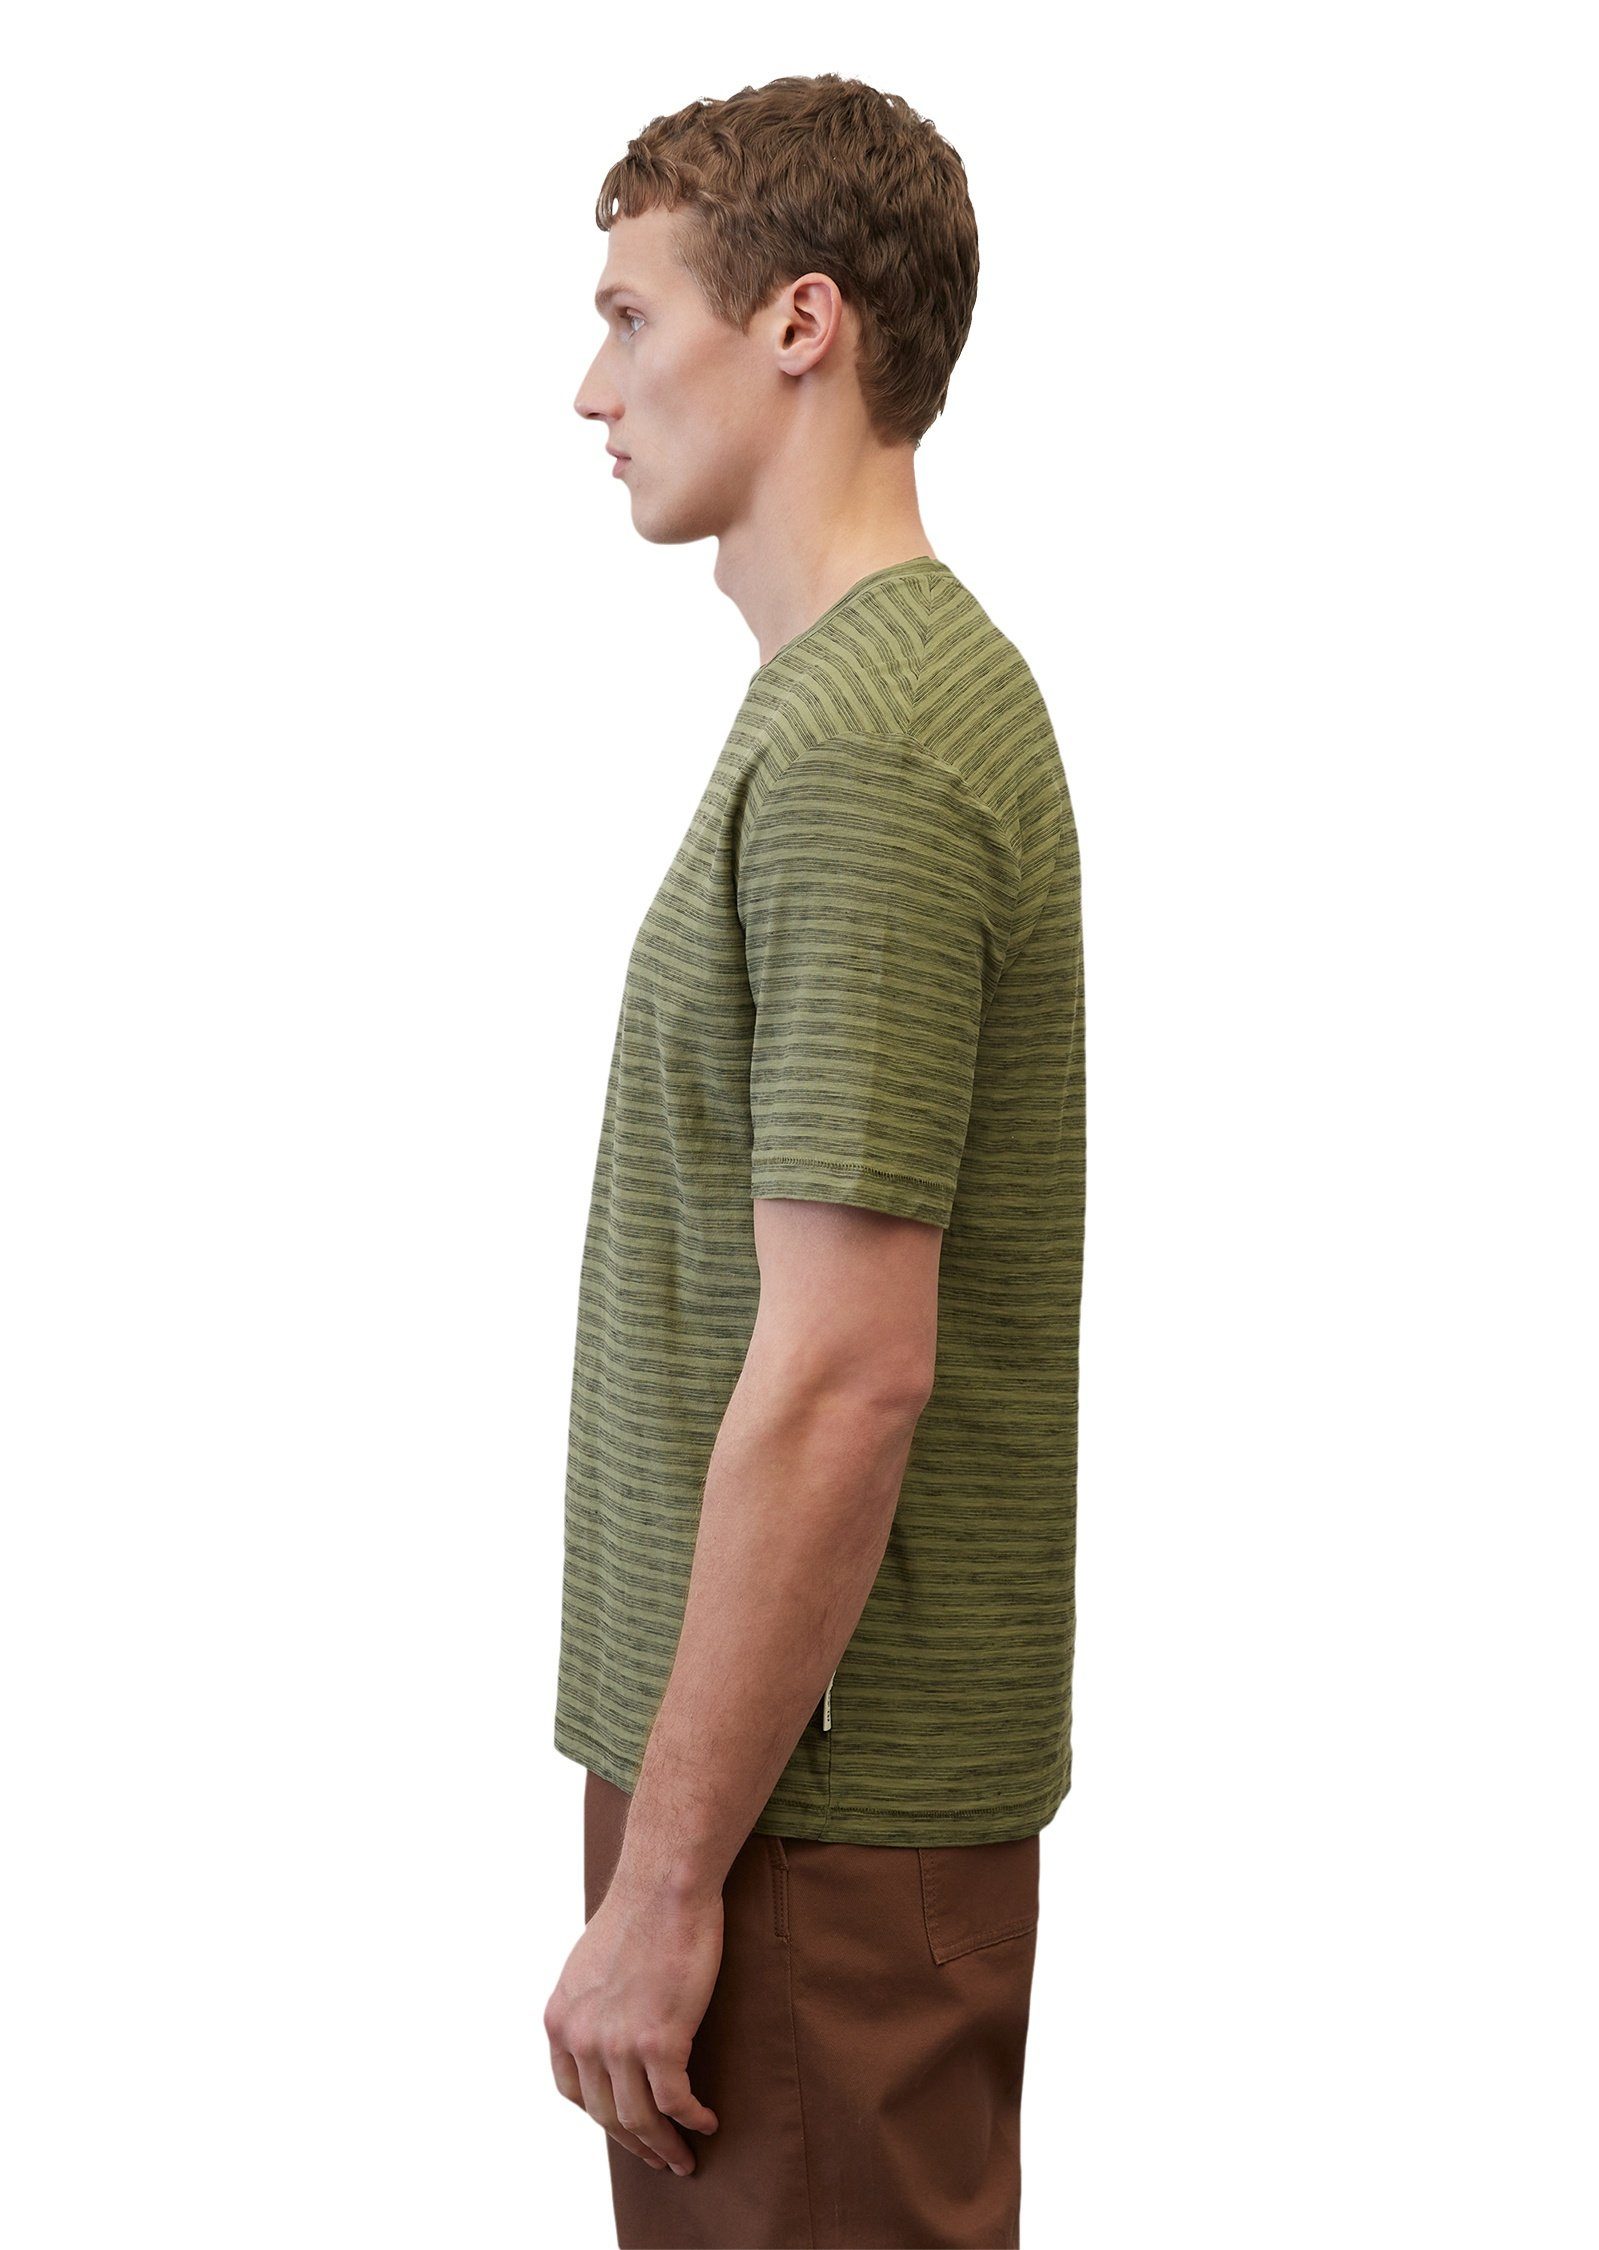 Marc O'Polo softem Slub-Jersey grün T-Shirt in